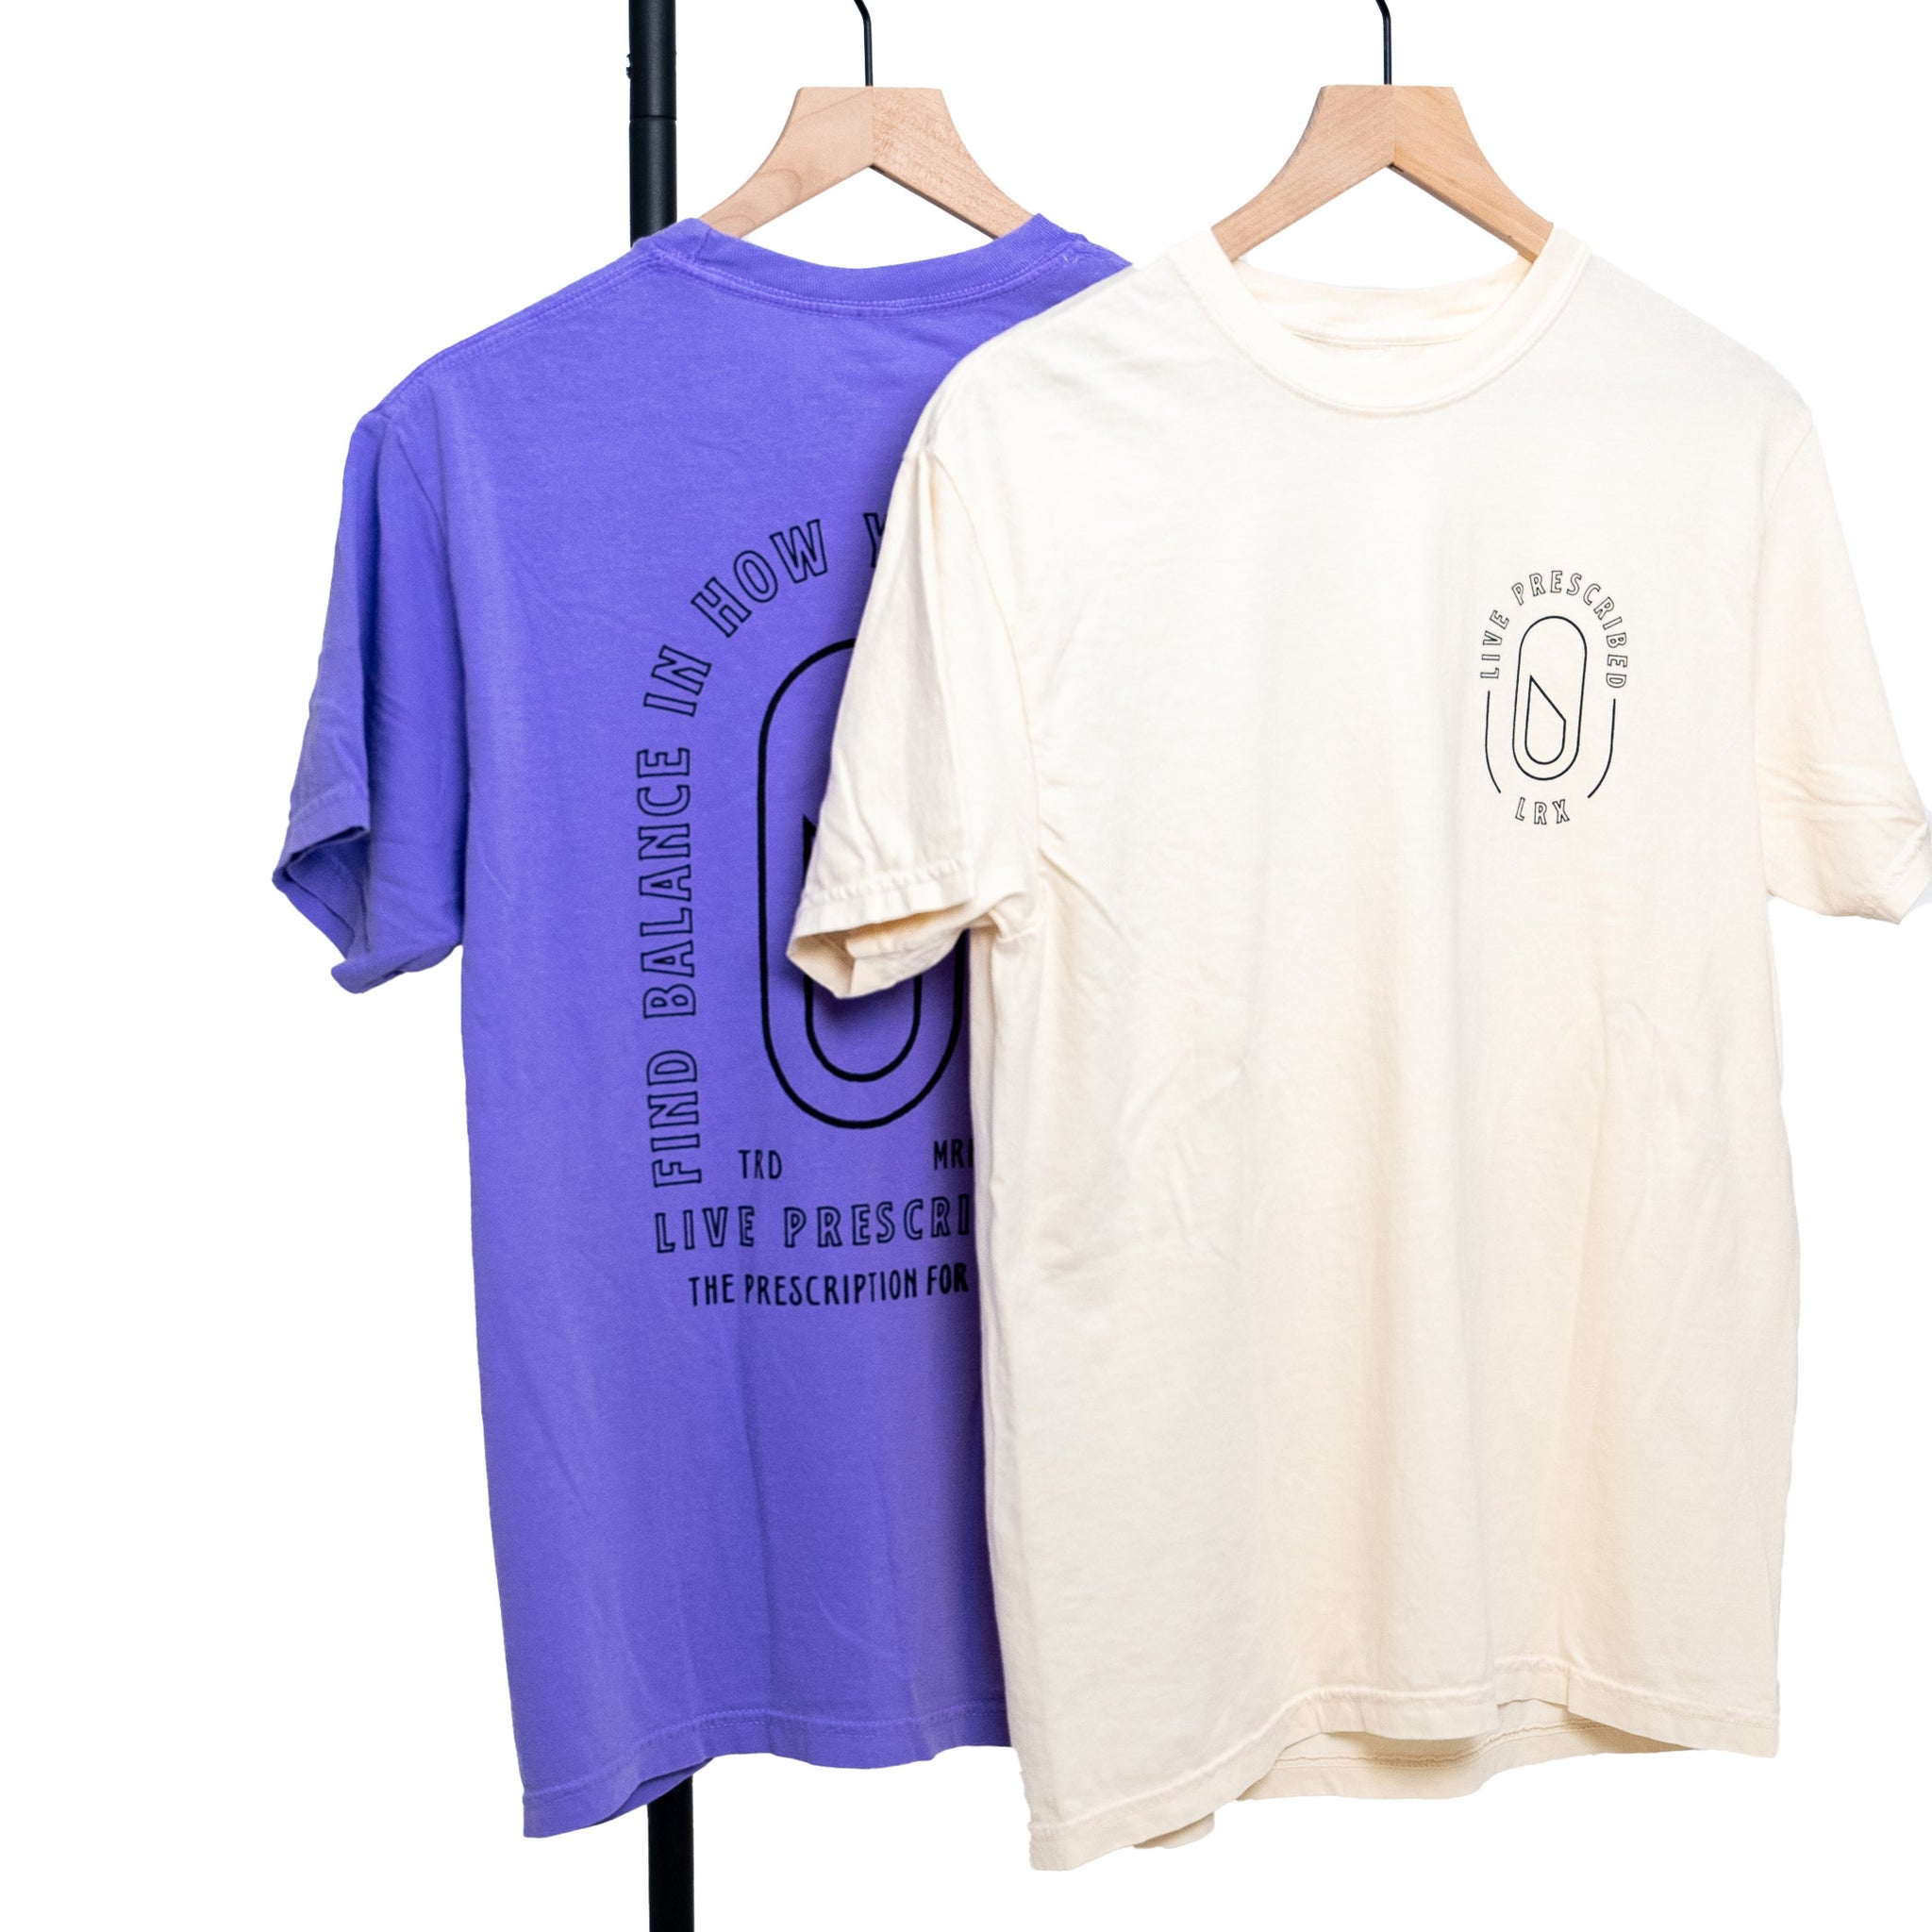 The "PFL" Balance Shirt - Violet (Limited Edition)